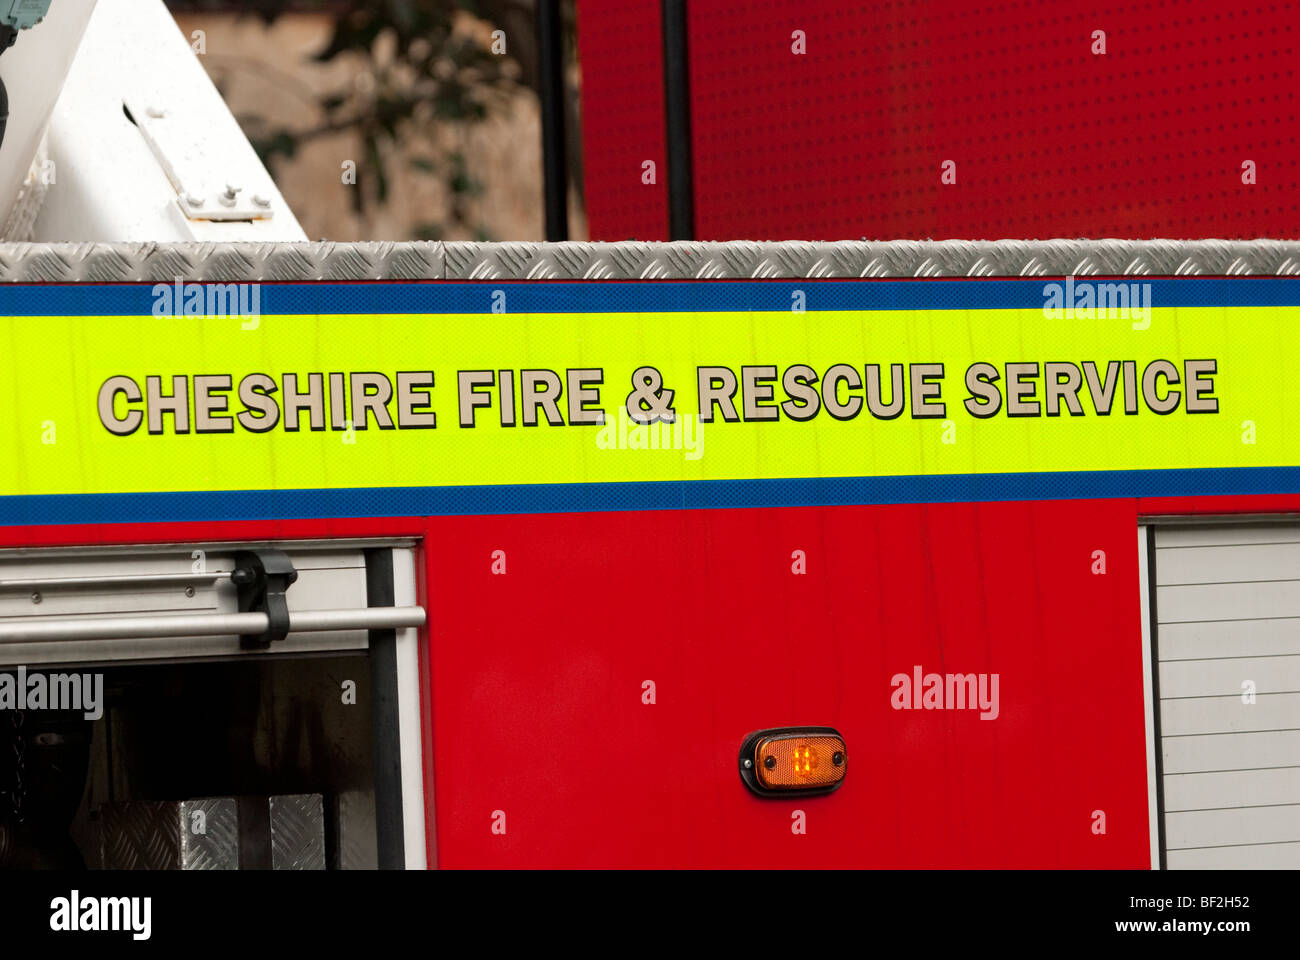 Cheshire Fire & Rescue Service hydraulic platform fir eengine / appliance Stock Photo